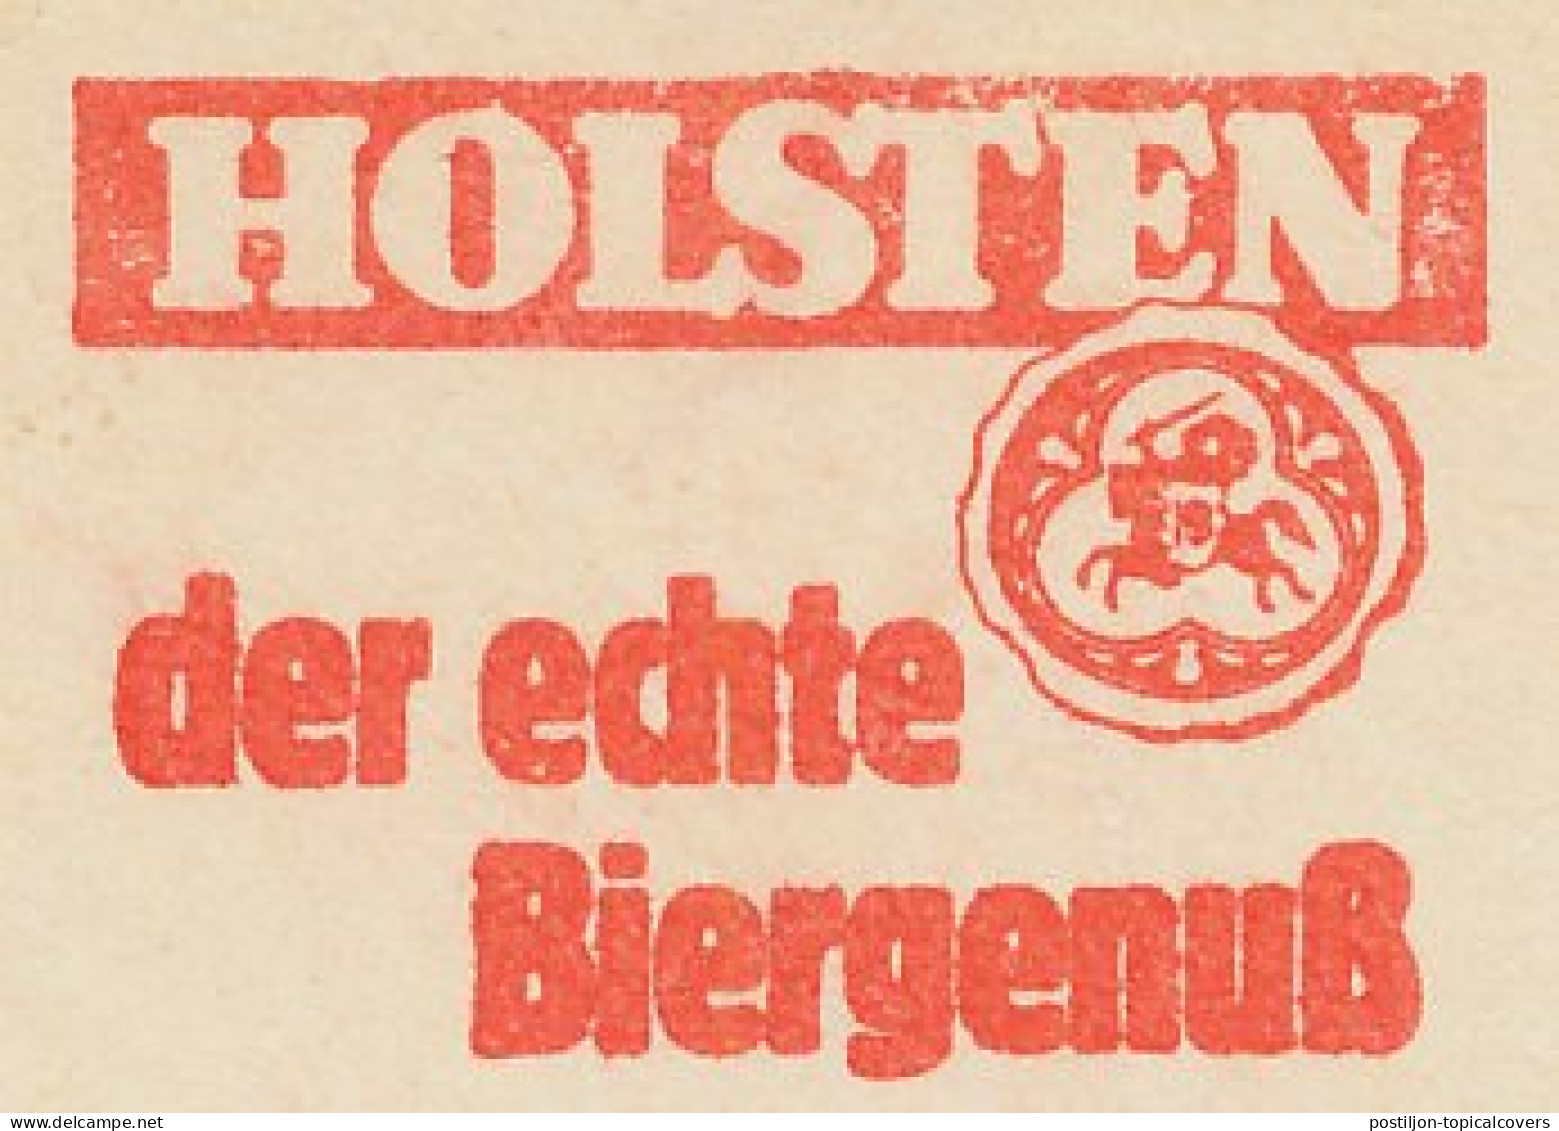 Meter Cut Germany 1969 Beer - Holsten - Wines & Alcohols